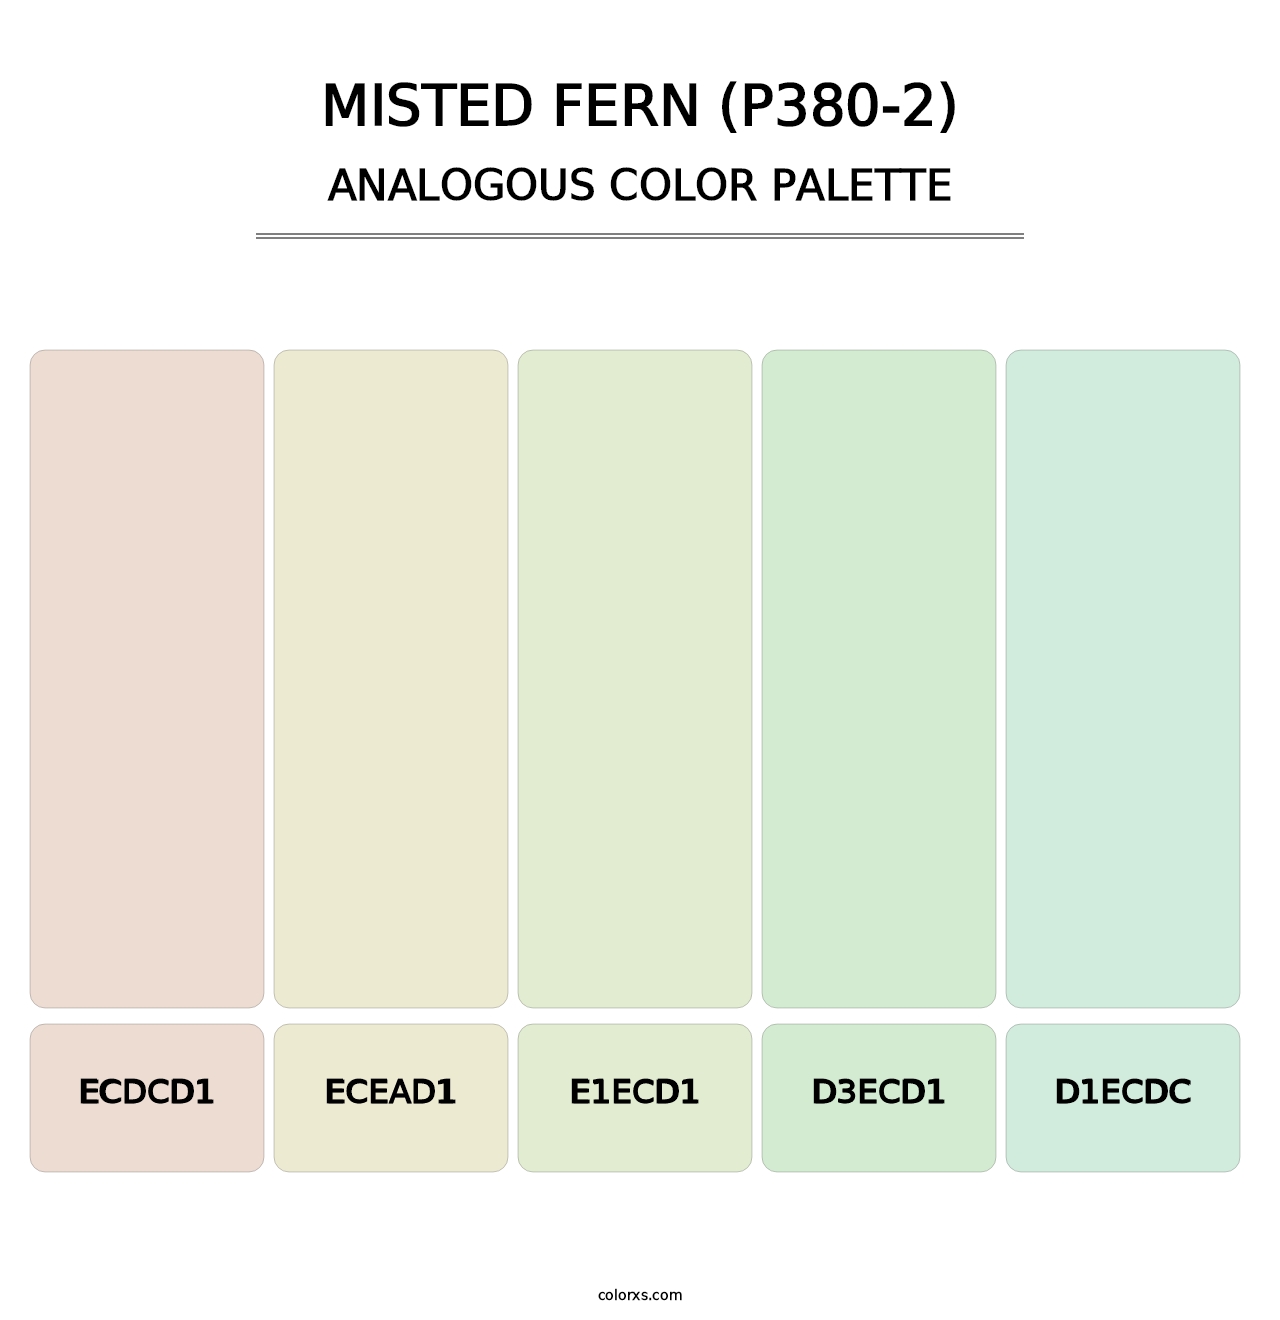 Misted Fern (P380-2) - Analogous Color Palette